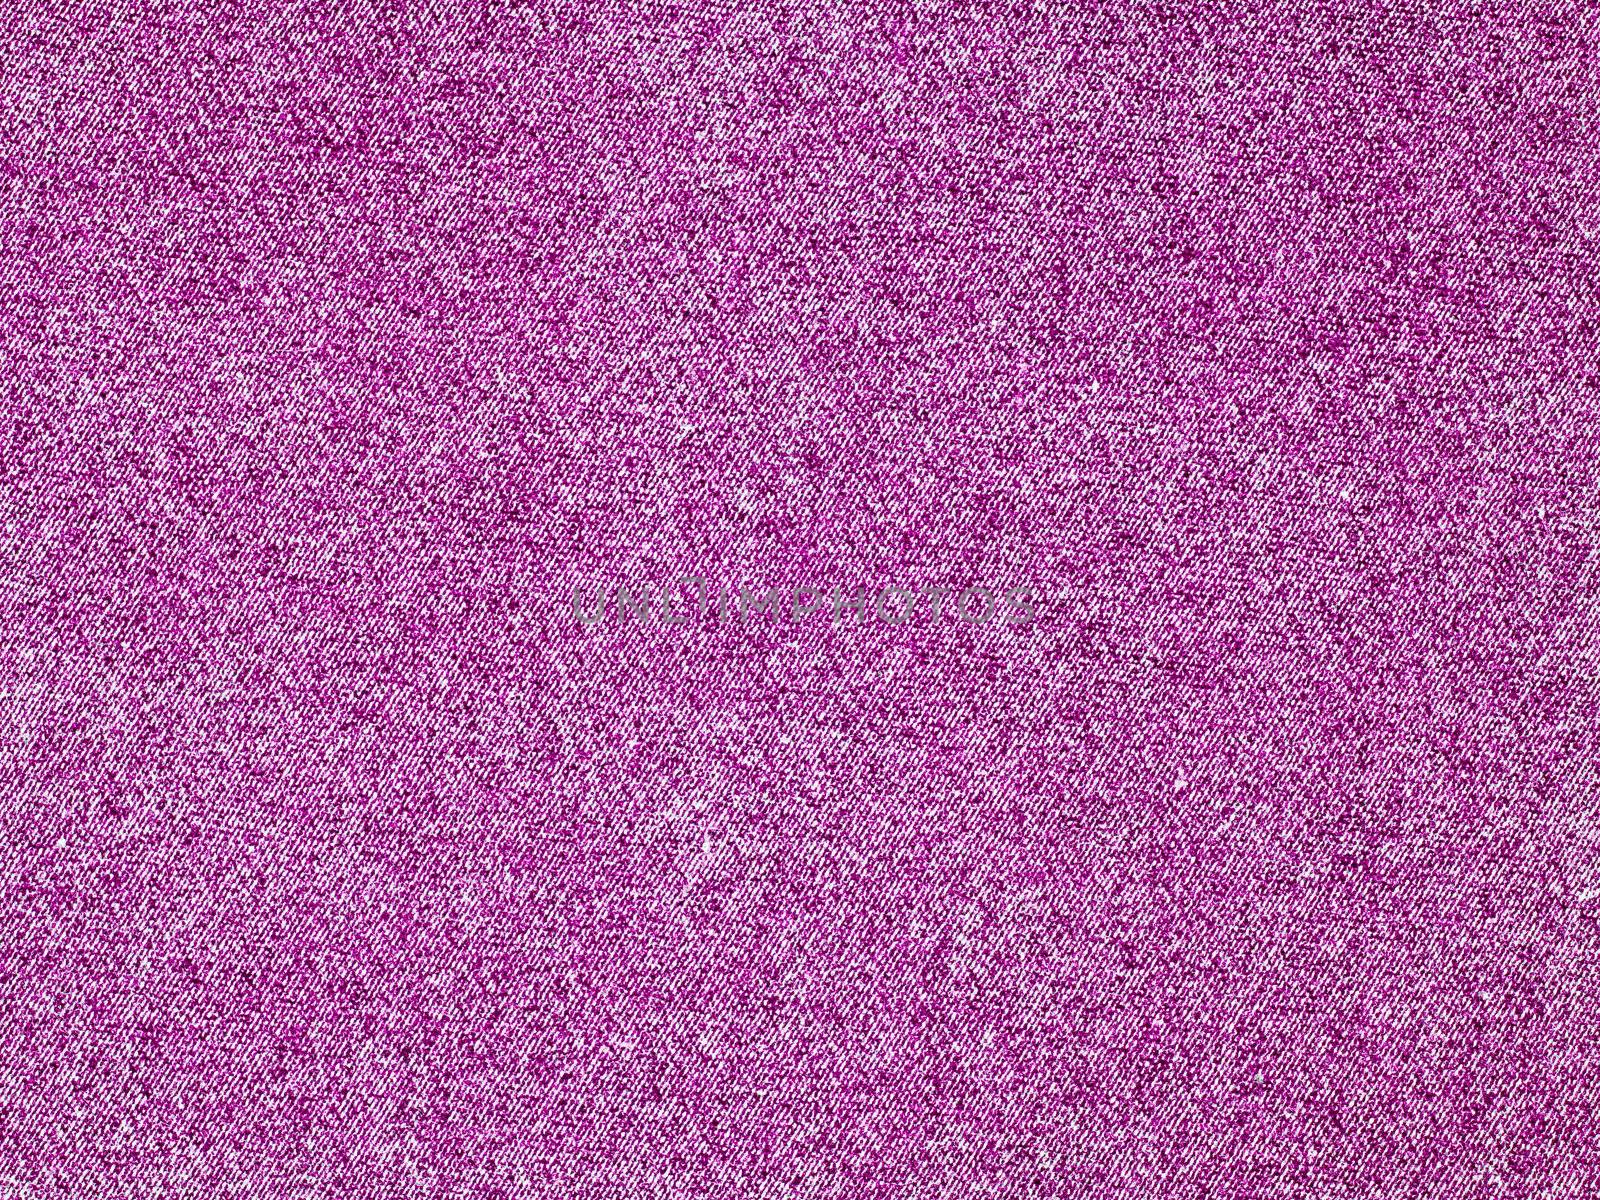 Full Frame Background of a Purple Denim Fabric Pattern by Frankljunior